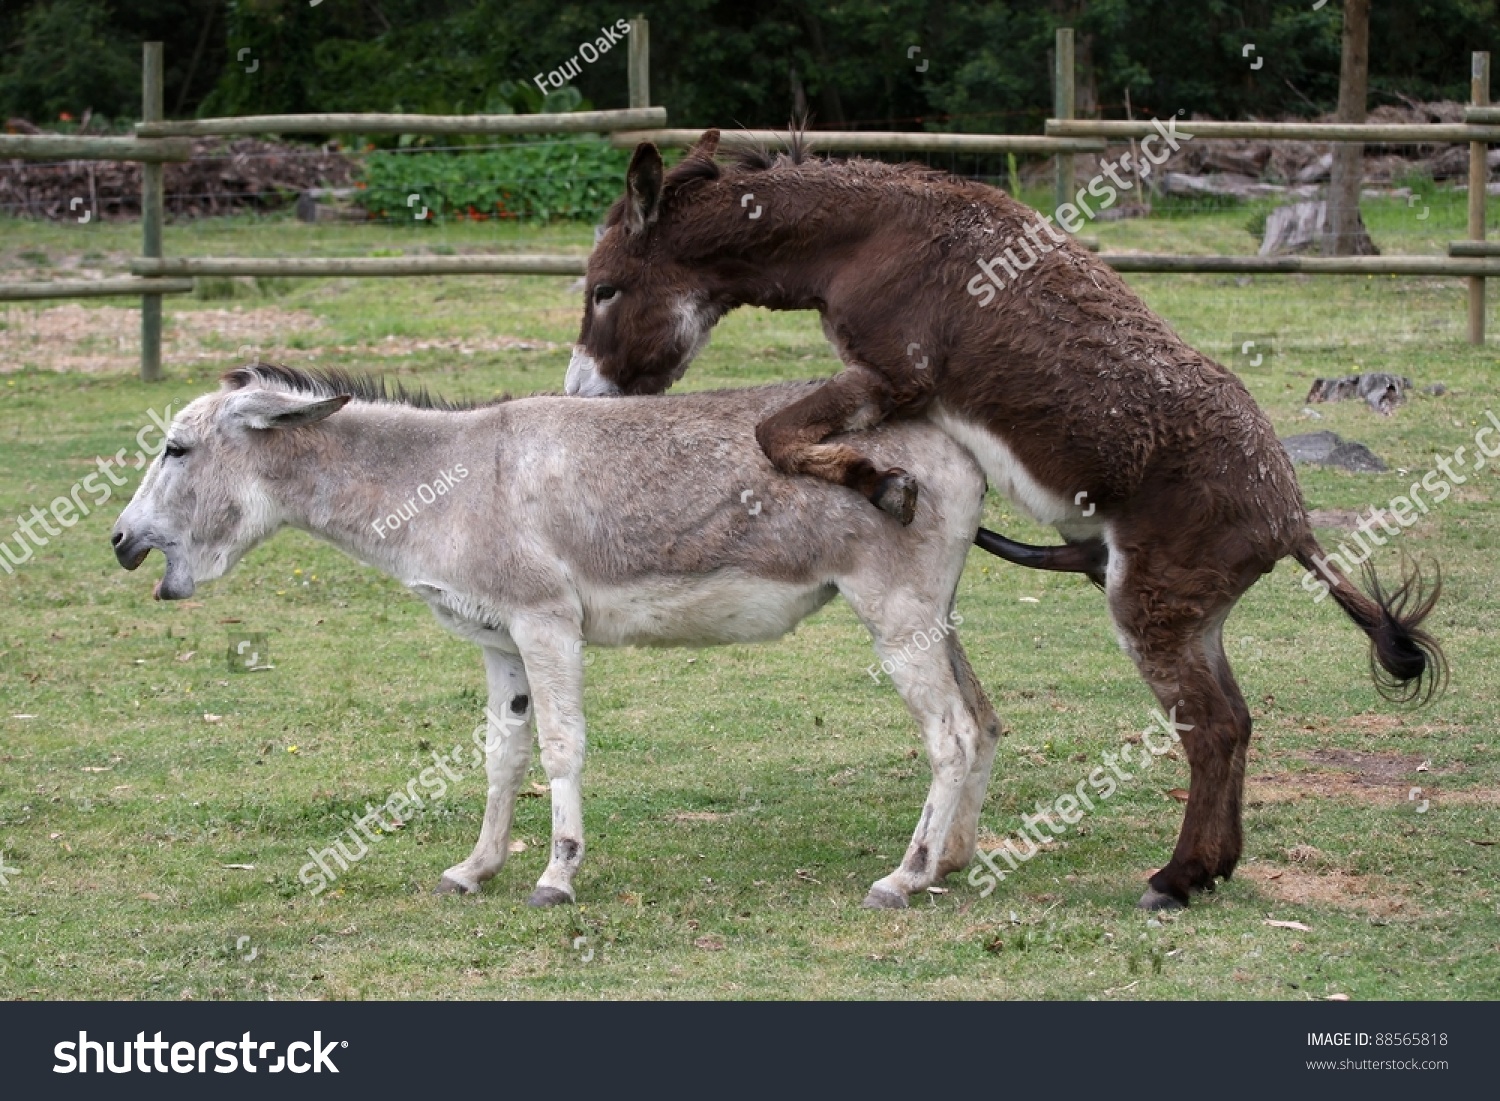 stock-photo-domesticated-donkeys-mating-on-a-farm-yard-88565818.jpg